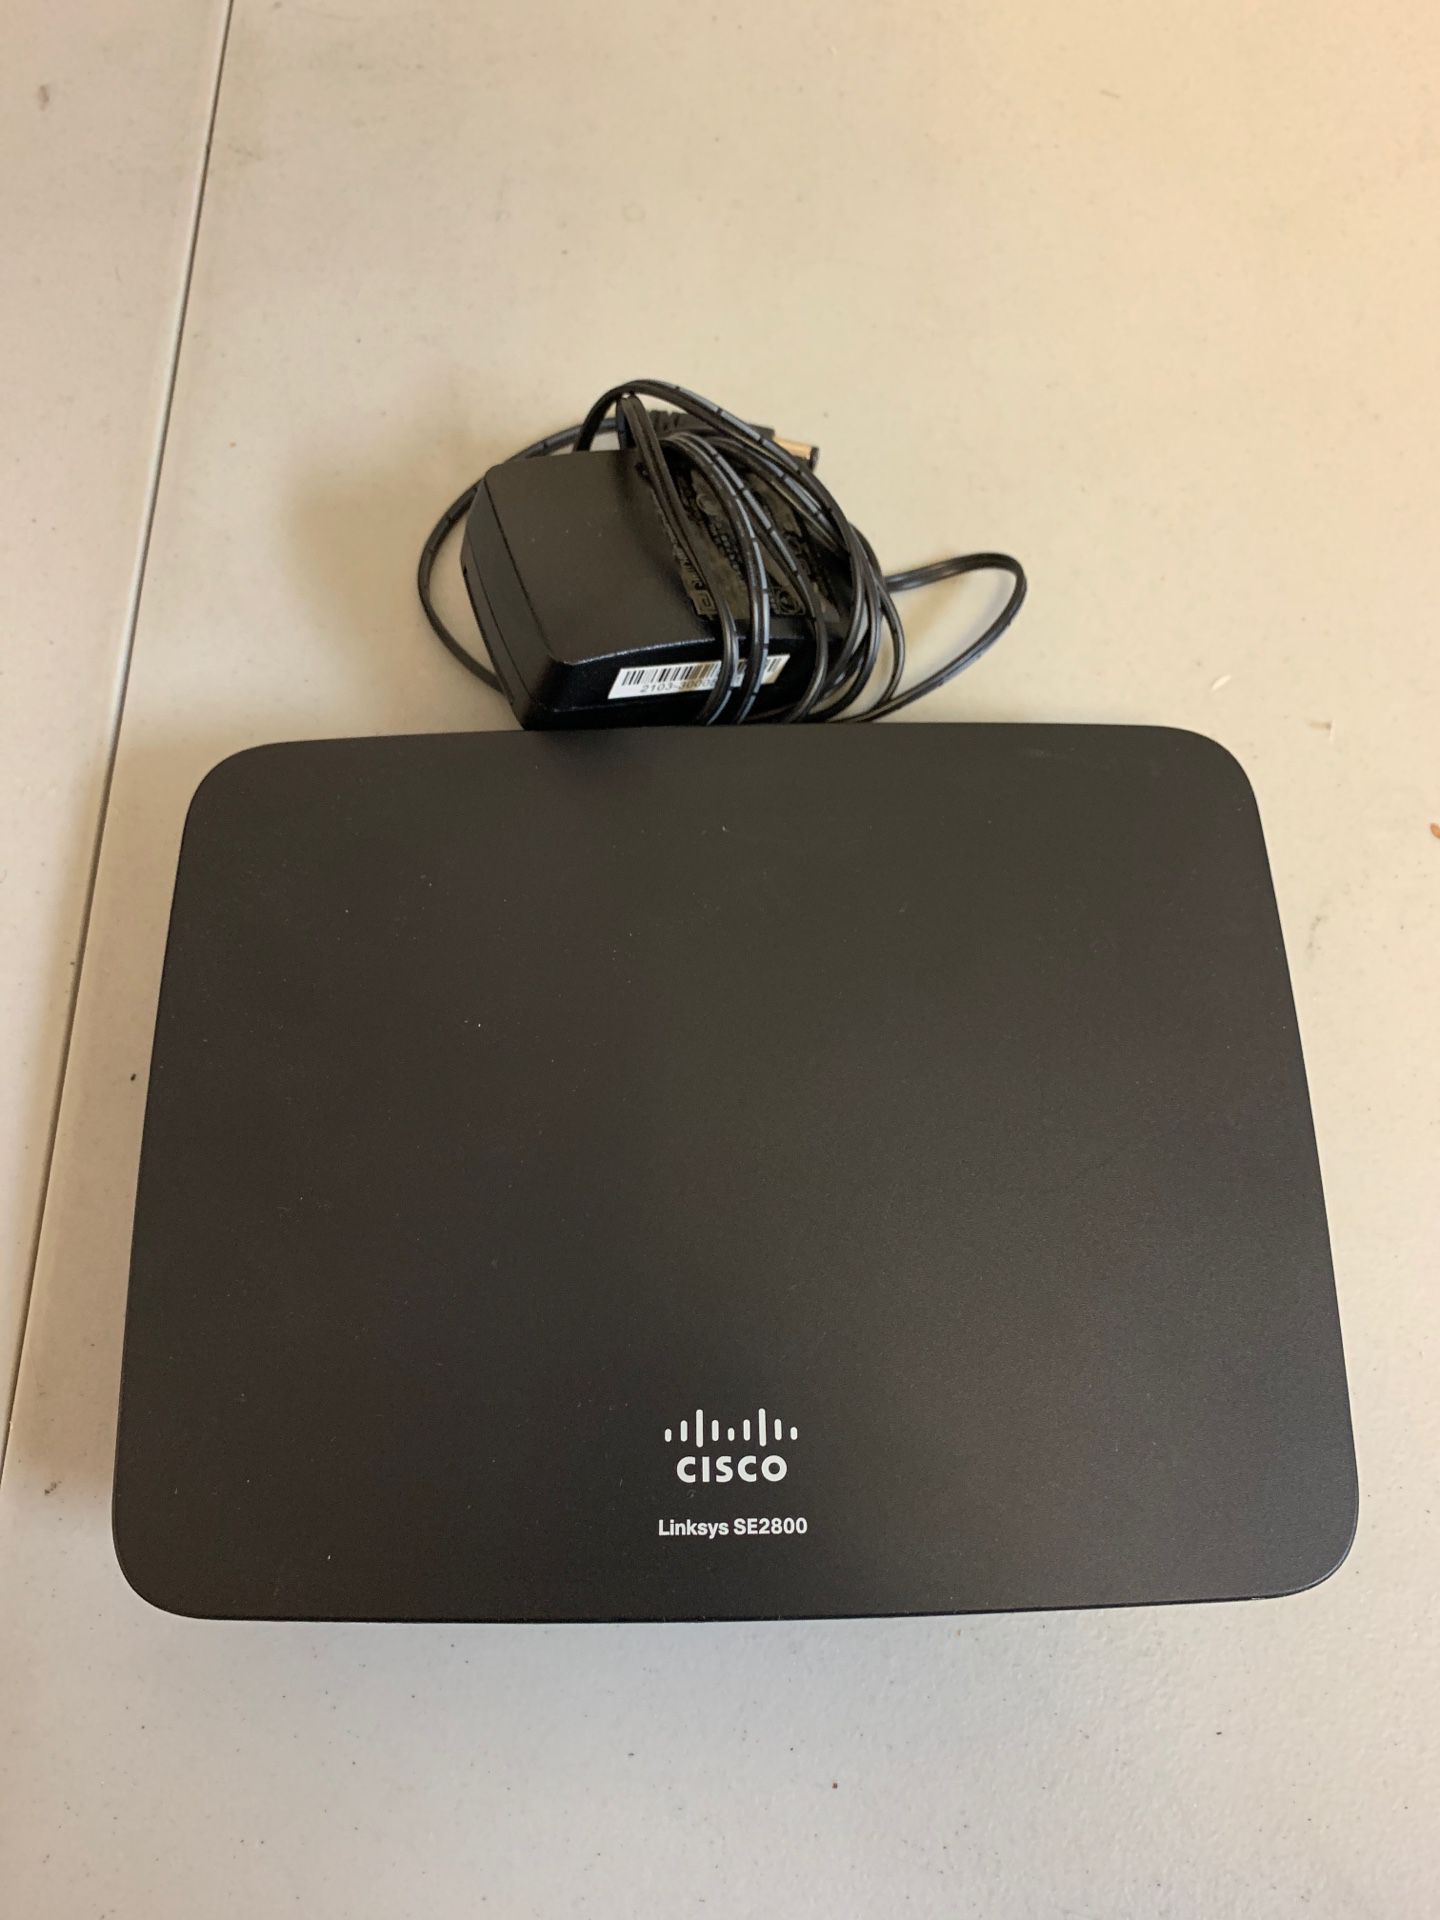 Cisco SE2800 8 port Gigabit Switch